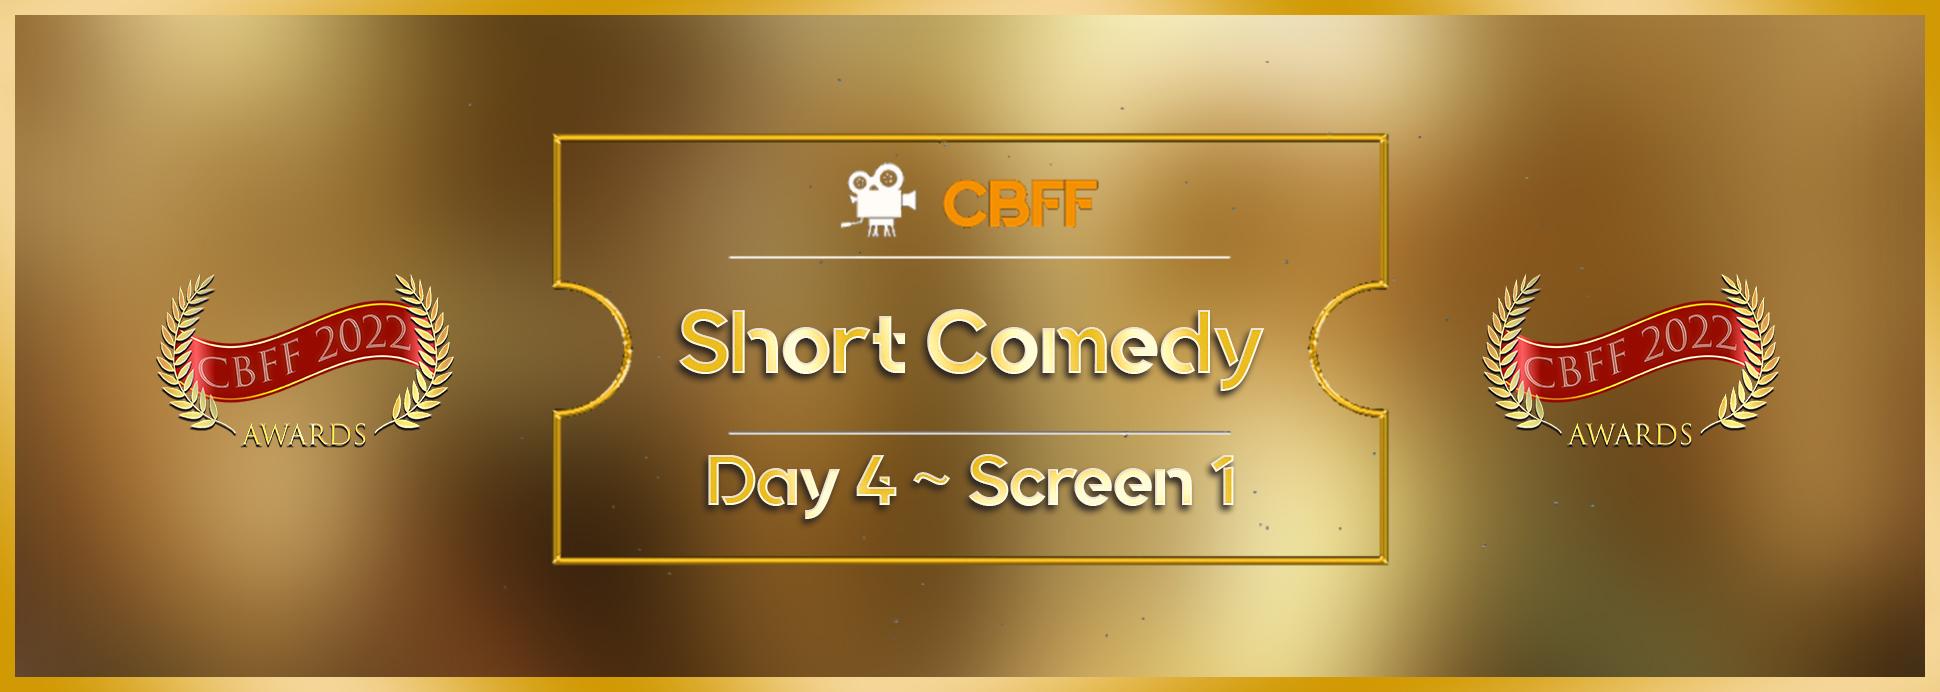 Day 4 Screen 1 Short Comedy 